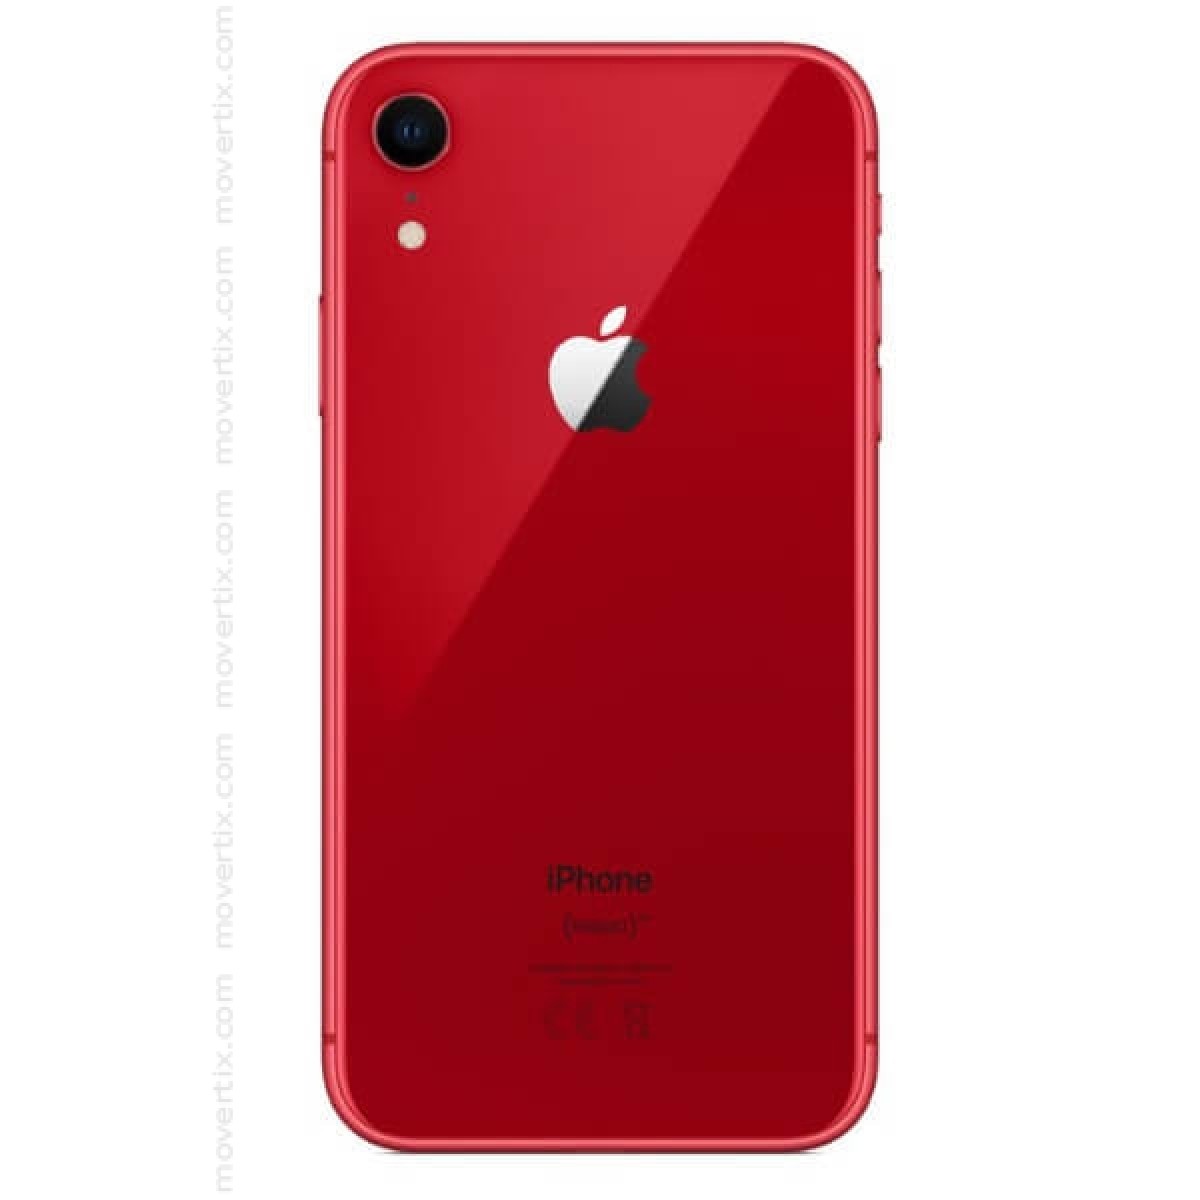 iPhoneXR 64GB RED - allnightpress.com